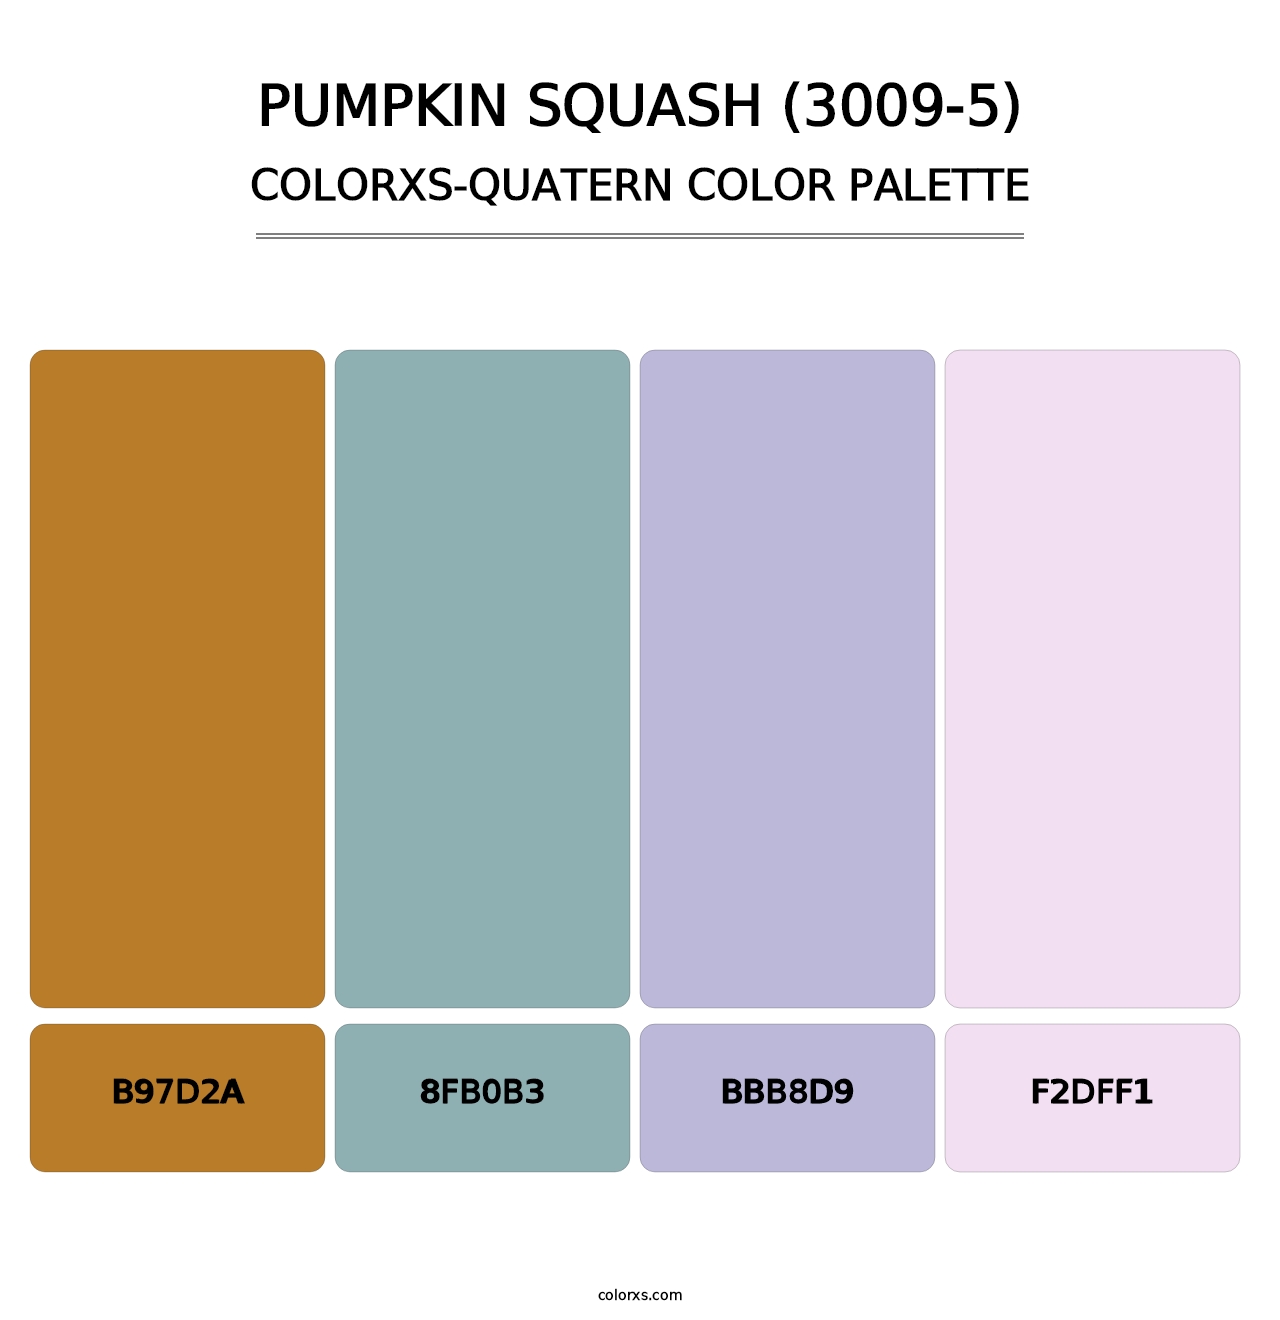 Pumpkin Squash (3009-5) - Colorxs Quatern Palette